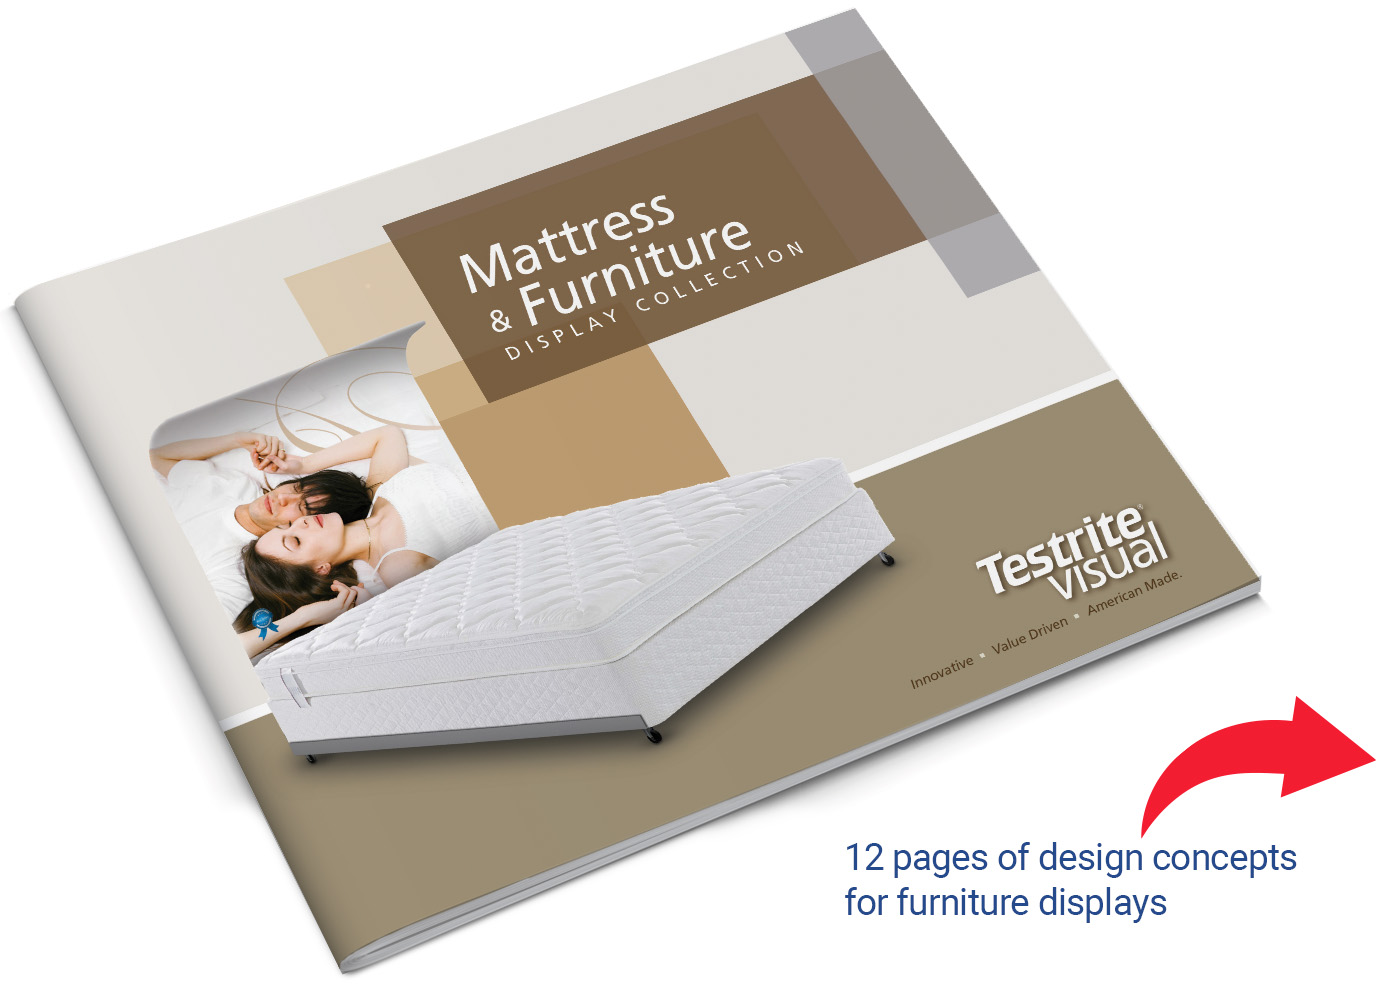 Mattress & Furniture Display Design Guide